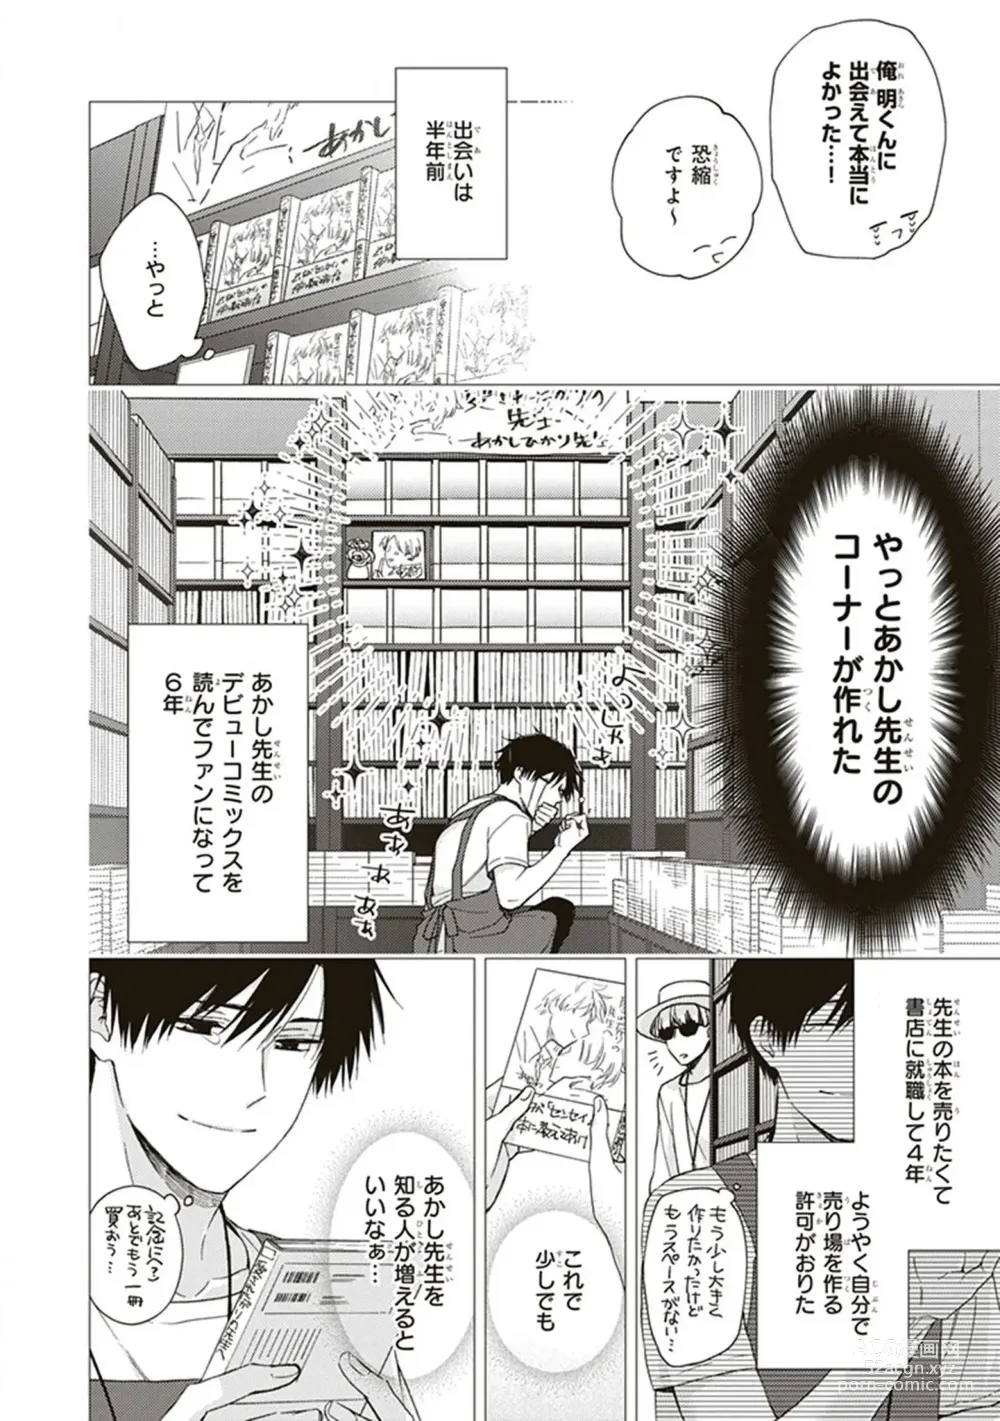 Page 8 of manga BL Mangaka-kun, Ecchi na xx o Suru